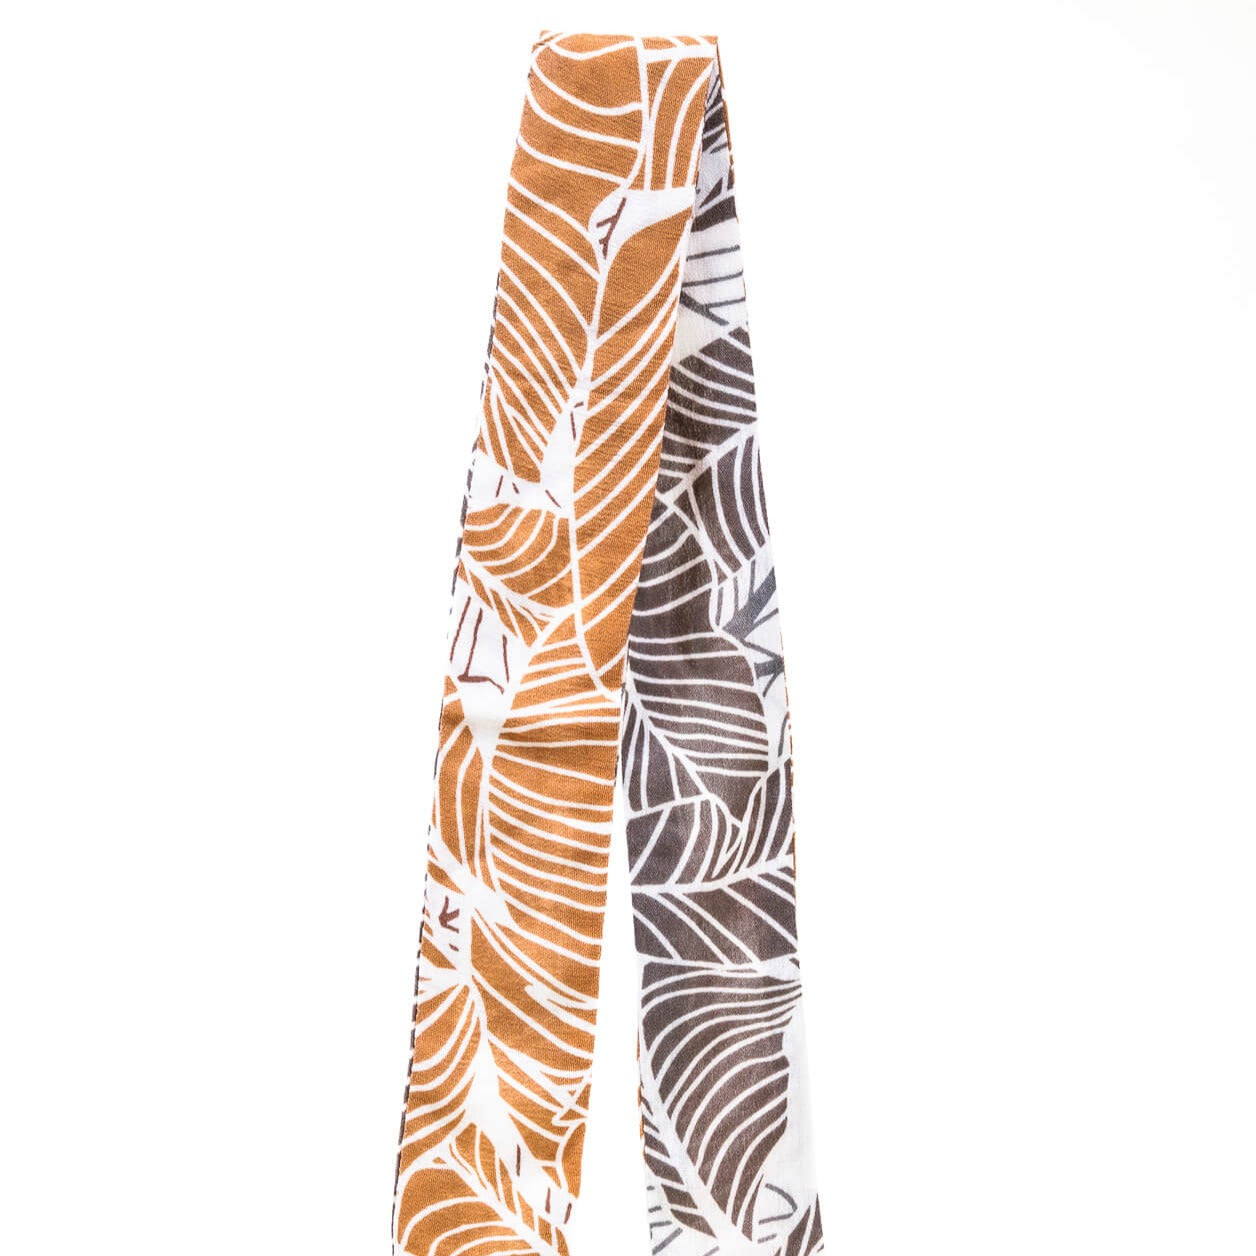 Cay Sandy Orange Palm Leaf Print Double-Sided Headband